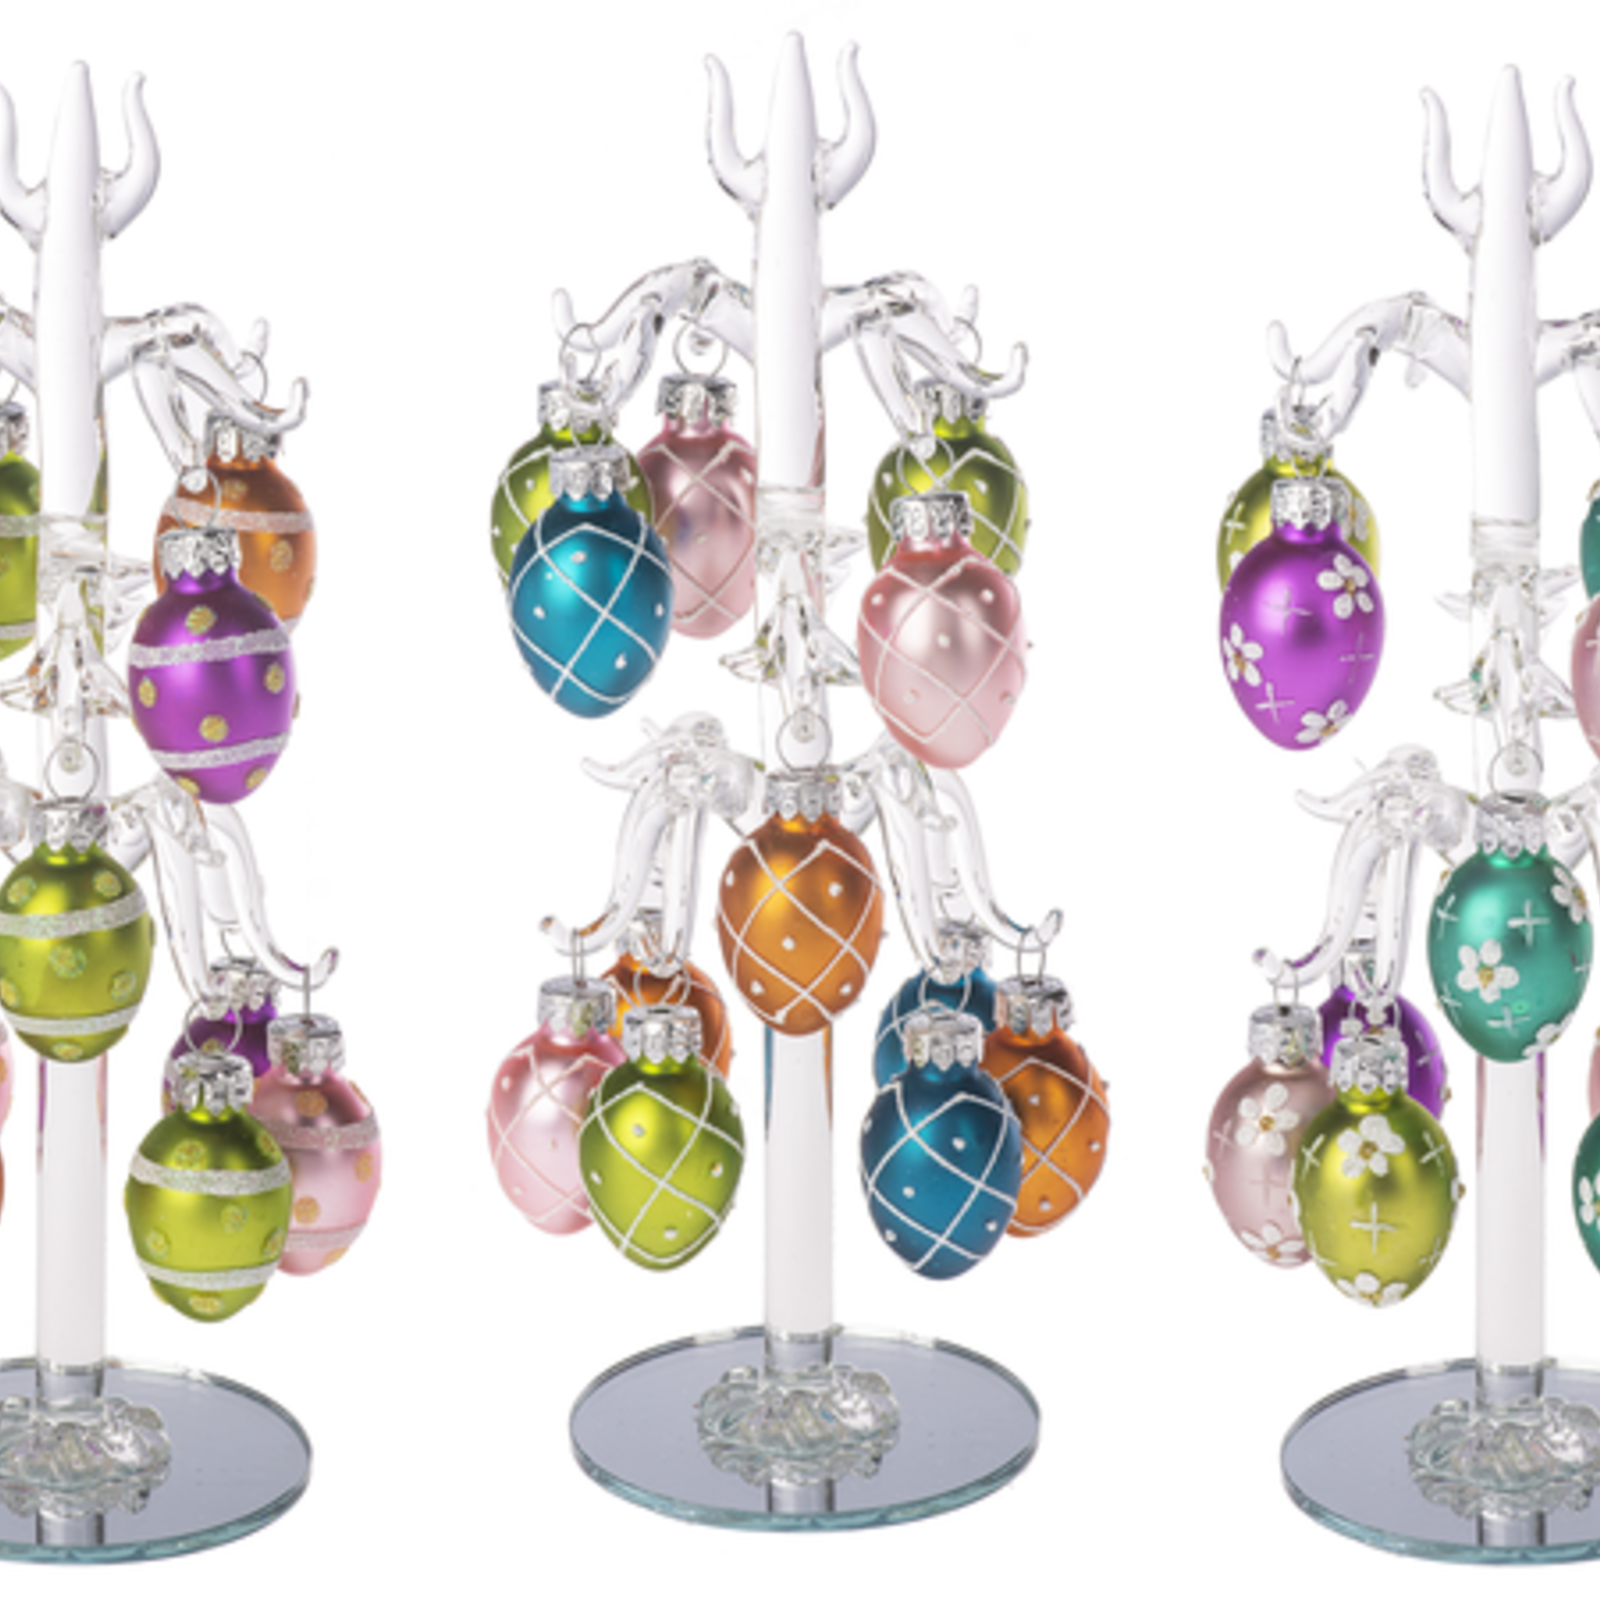 Ganz Handblown Easter Egg Tree with 12 Egg Ornaments   EA16280 loading=